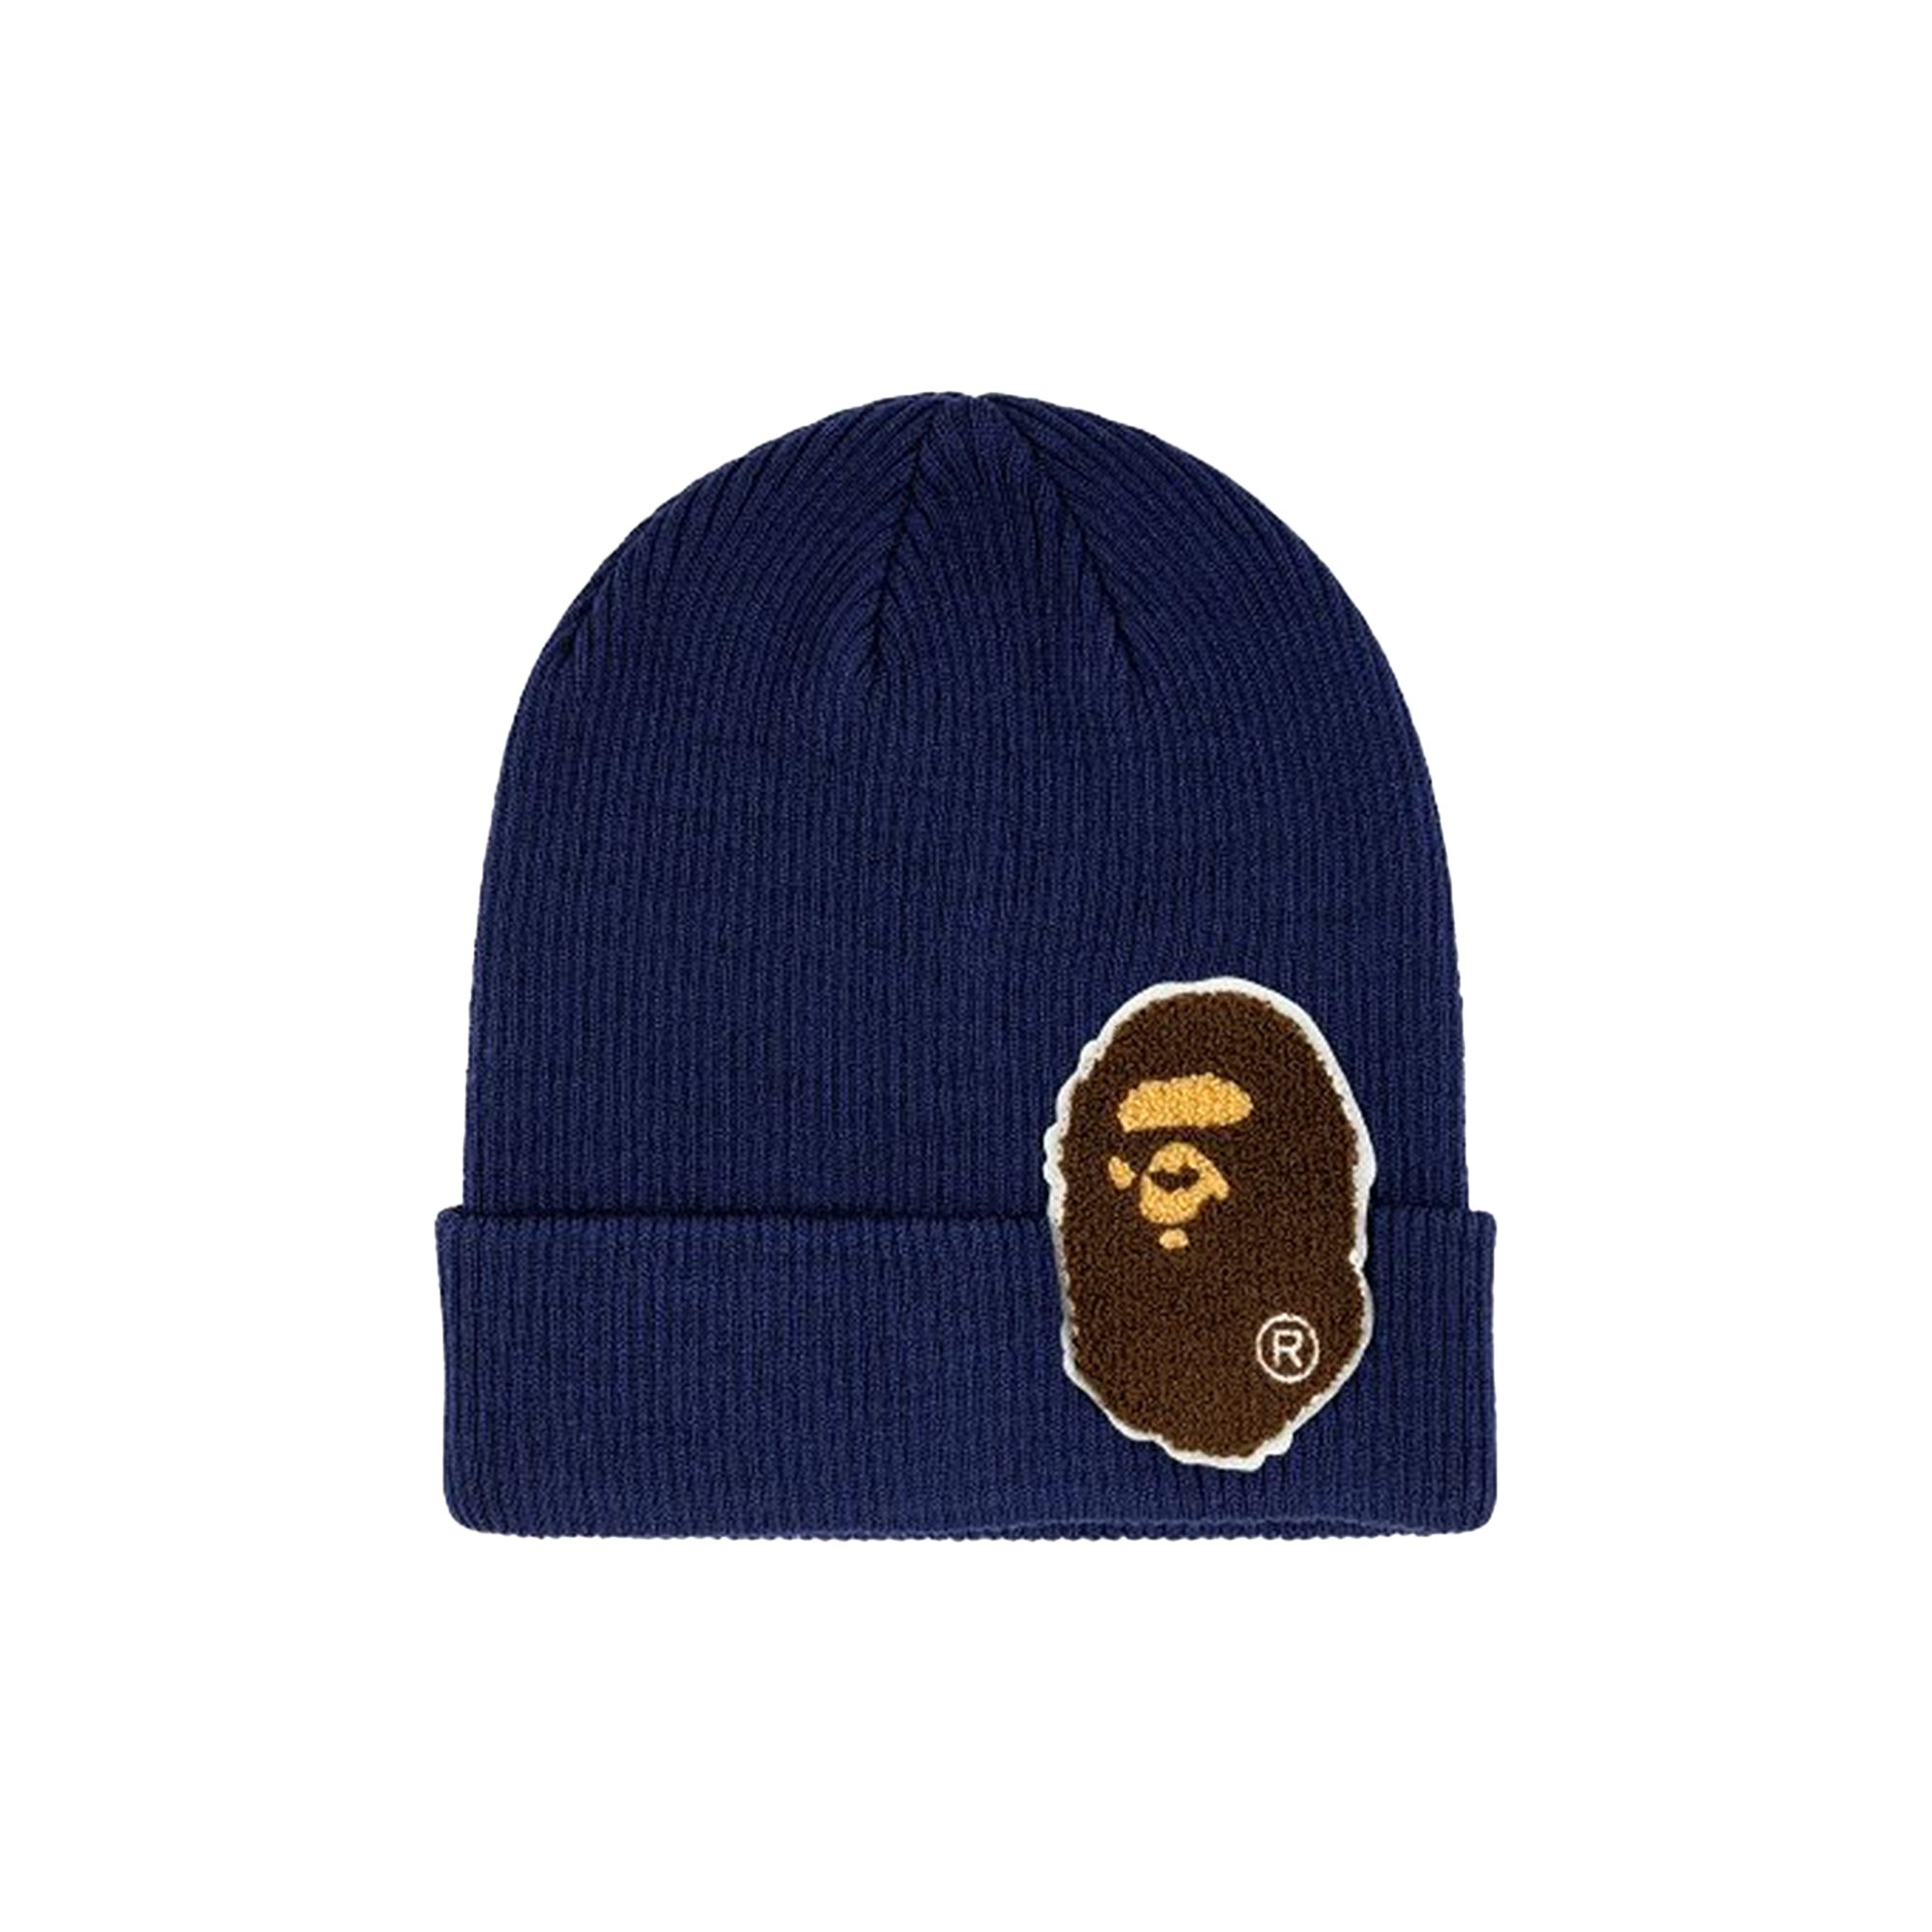 Buy BAPE Big Ape Head Knit Cap 'Navy' - 1G80 180 024 NAVY | GOAT